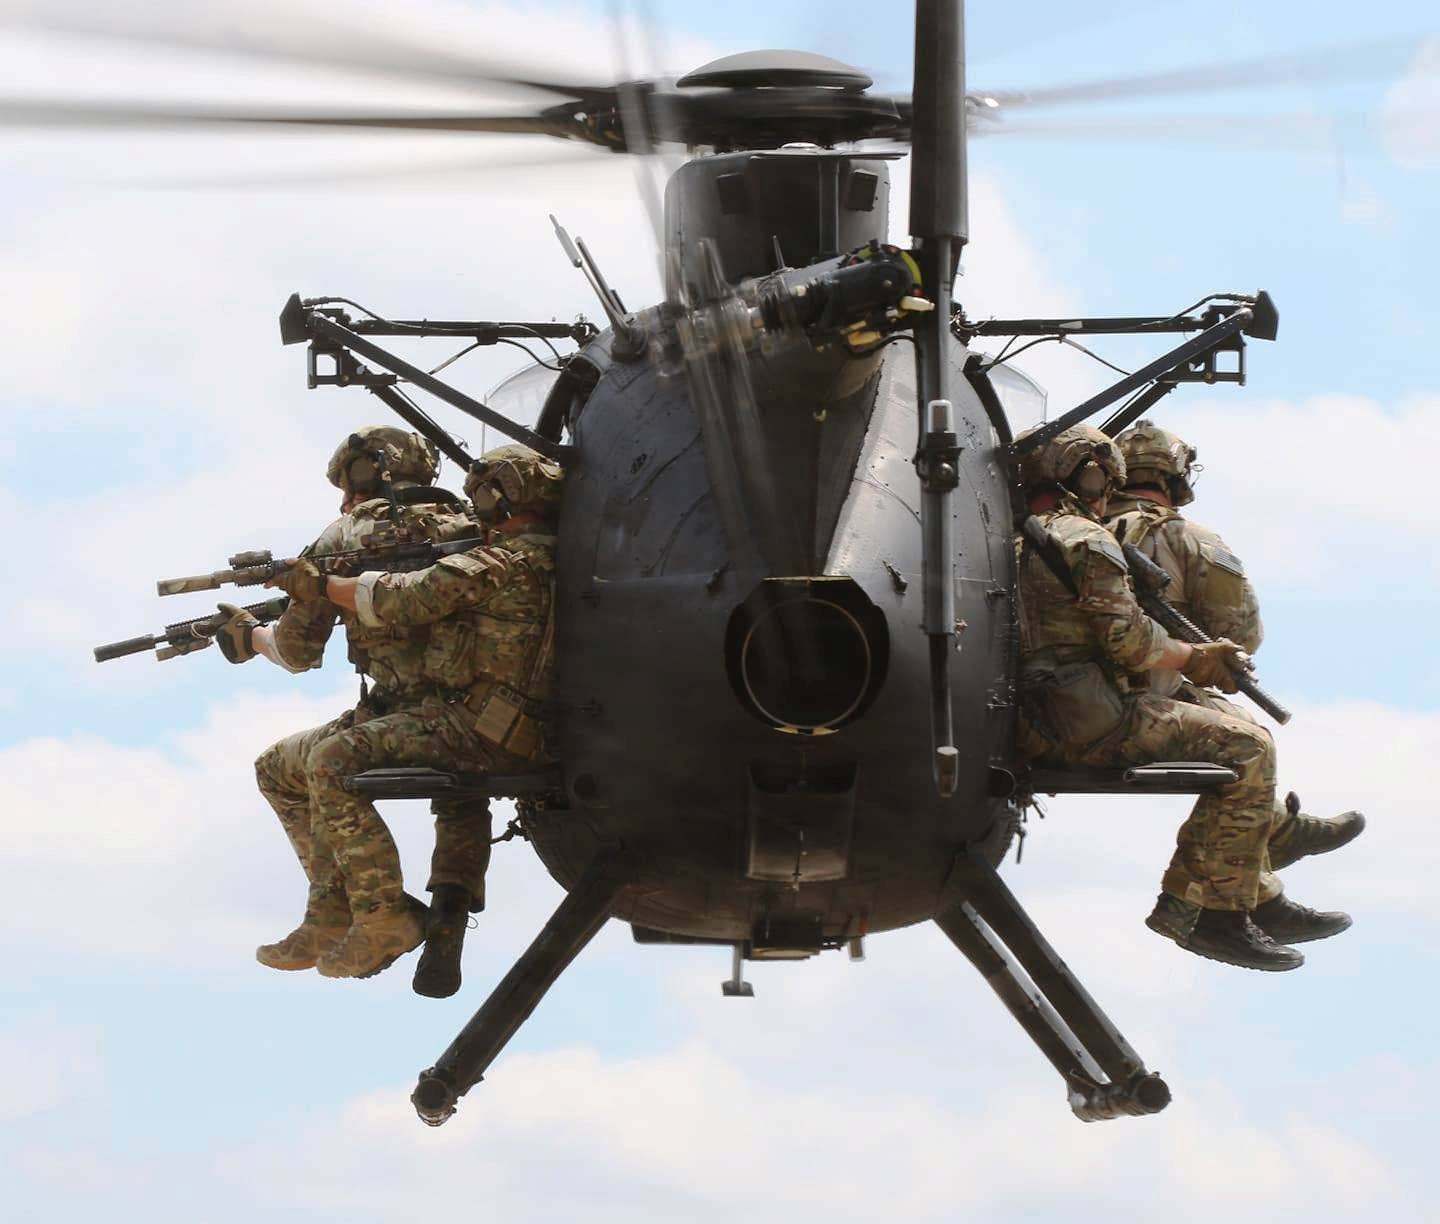 U.S. Army's&nbsp;160th Special Operations Aviation Regiment&nbsp;MH-6M Little Bird&nbsp;transports&nbsp;Rangers&nbsp;from the&nbsp;1st Ranger Battalion&nbsp;during a rapid deployment capabilities exercise. <em>U.S. Army</em>